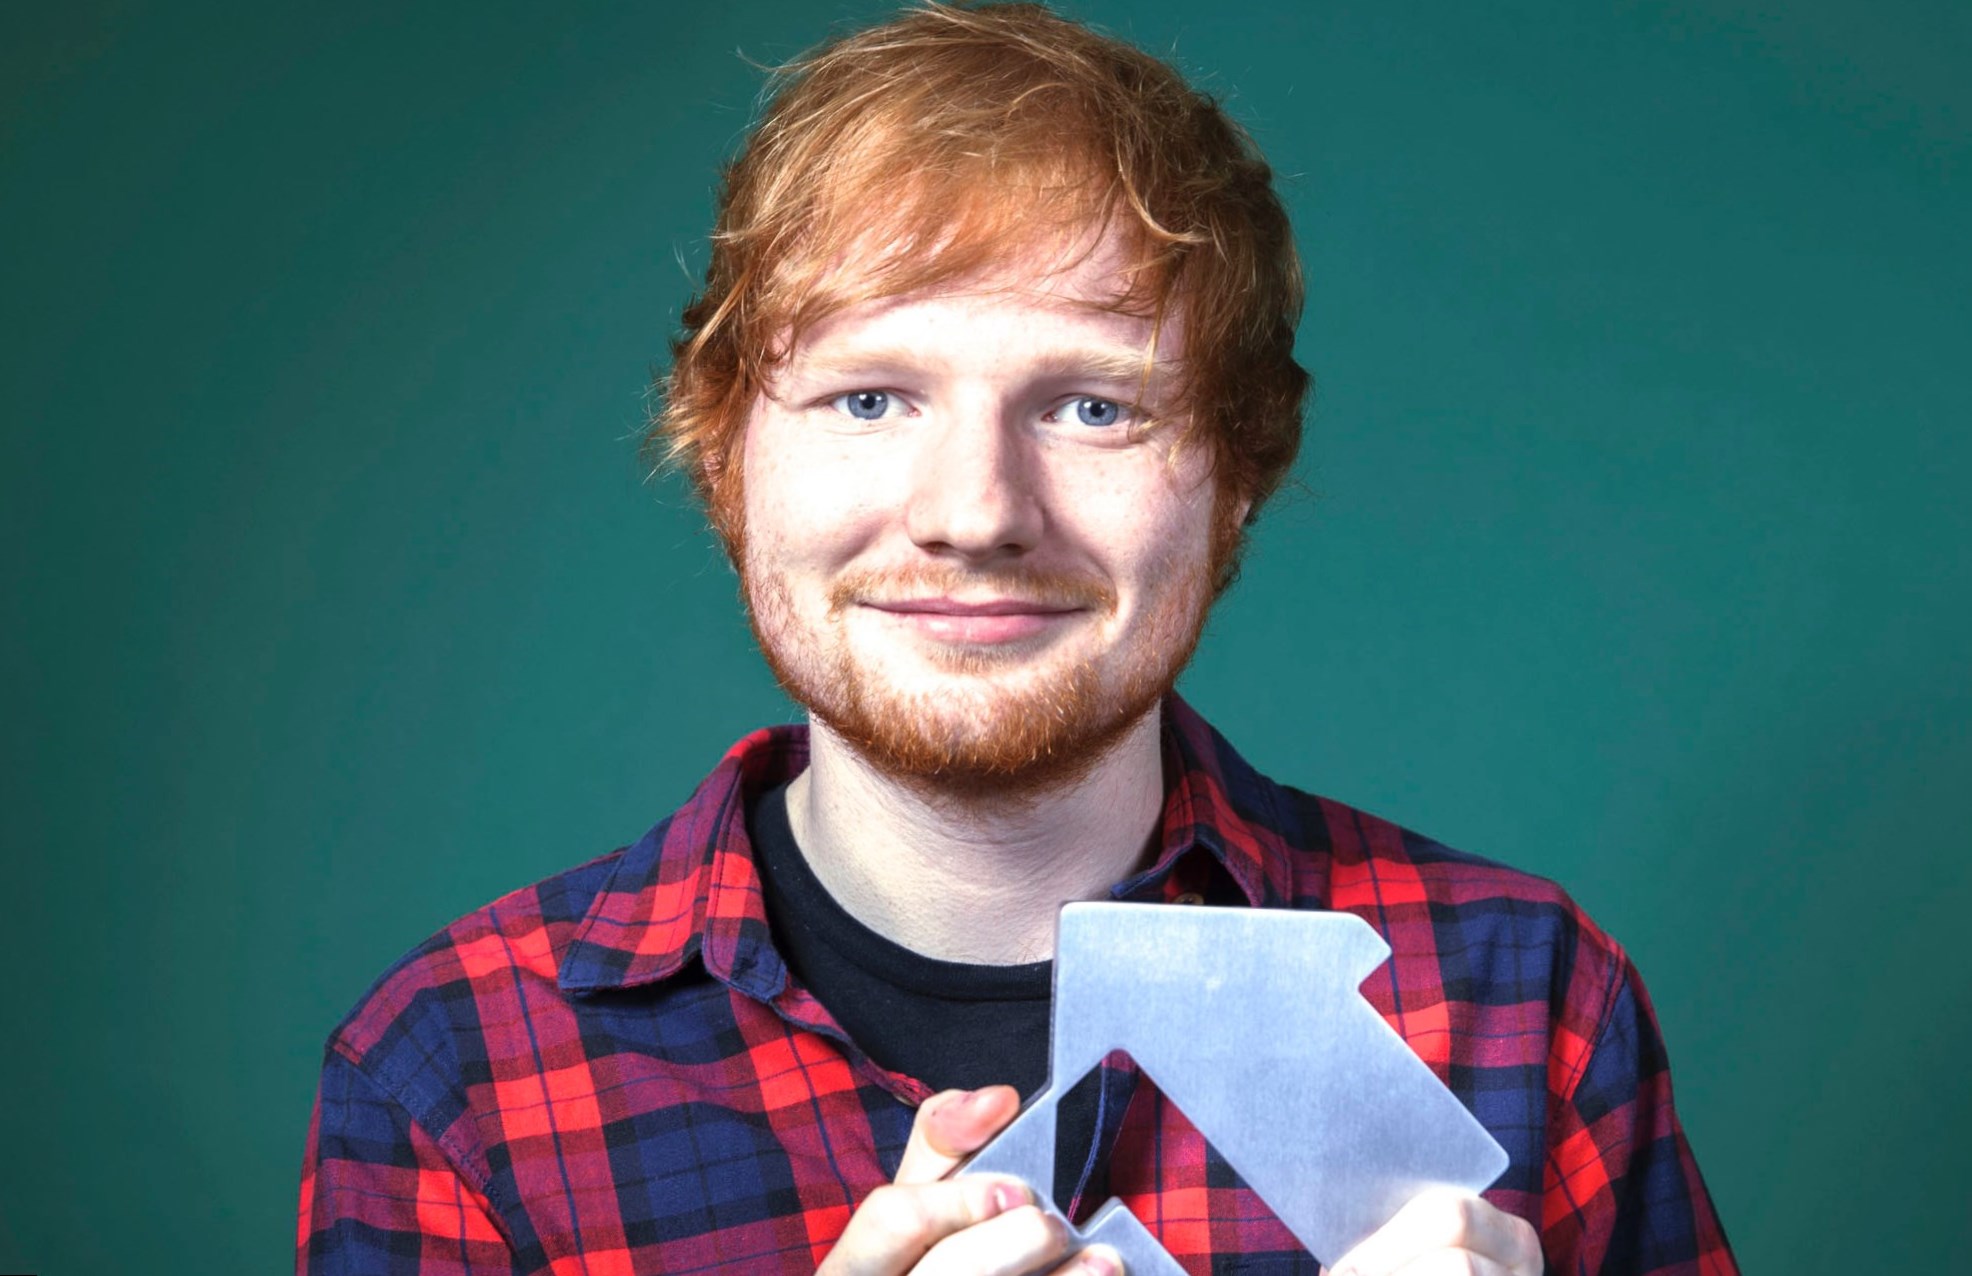 Ed Sheeran ightψος, βάρος, ηλικία, στατιστικές σώματος